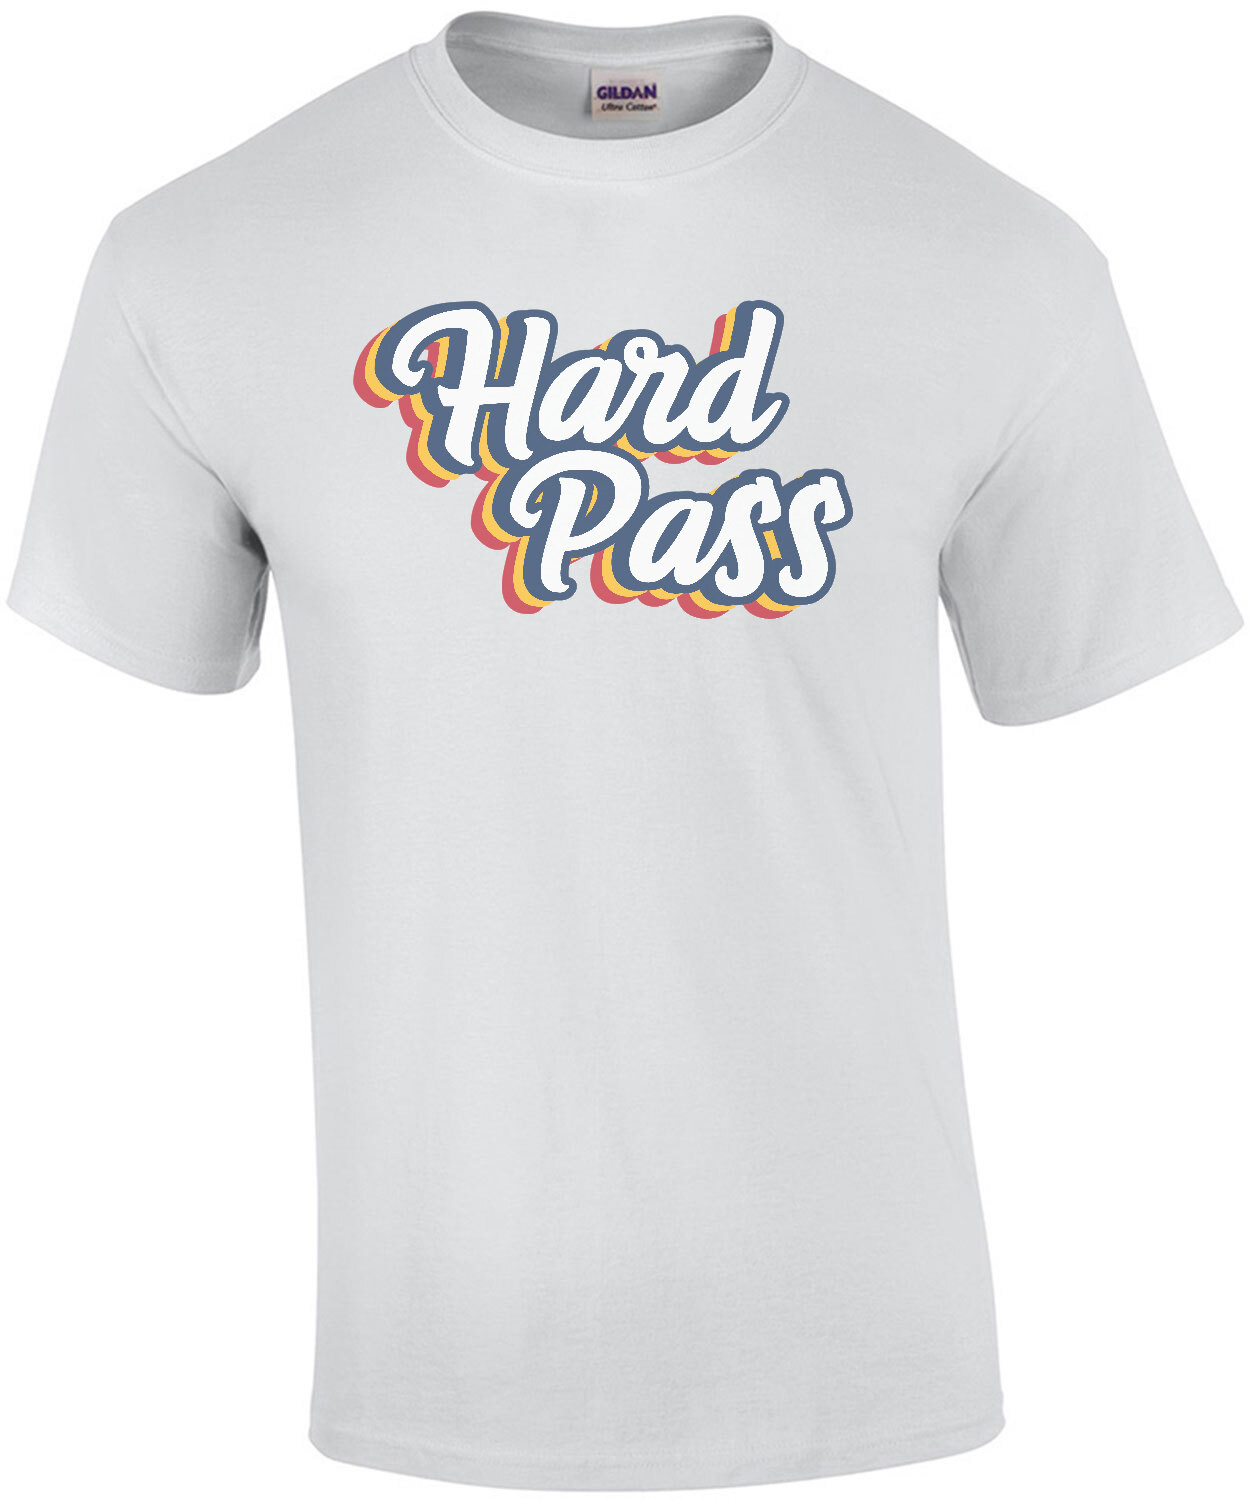 Hard Pass - Funny T-Shirt